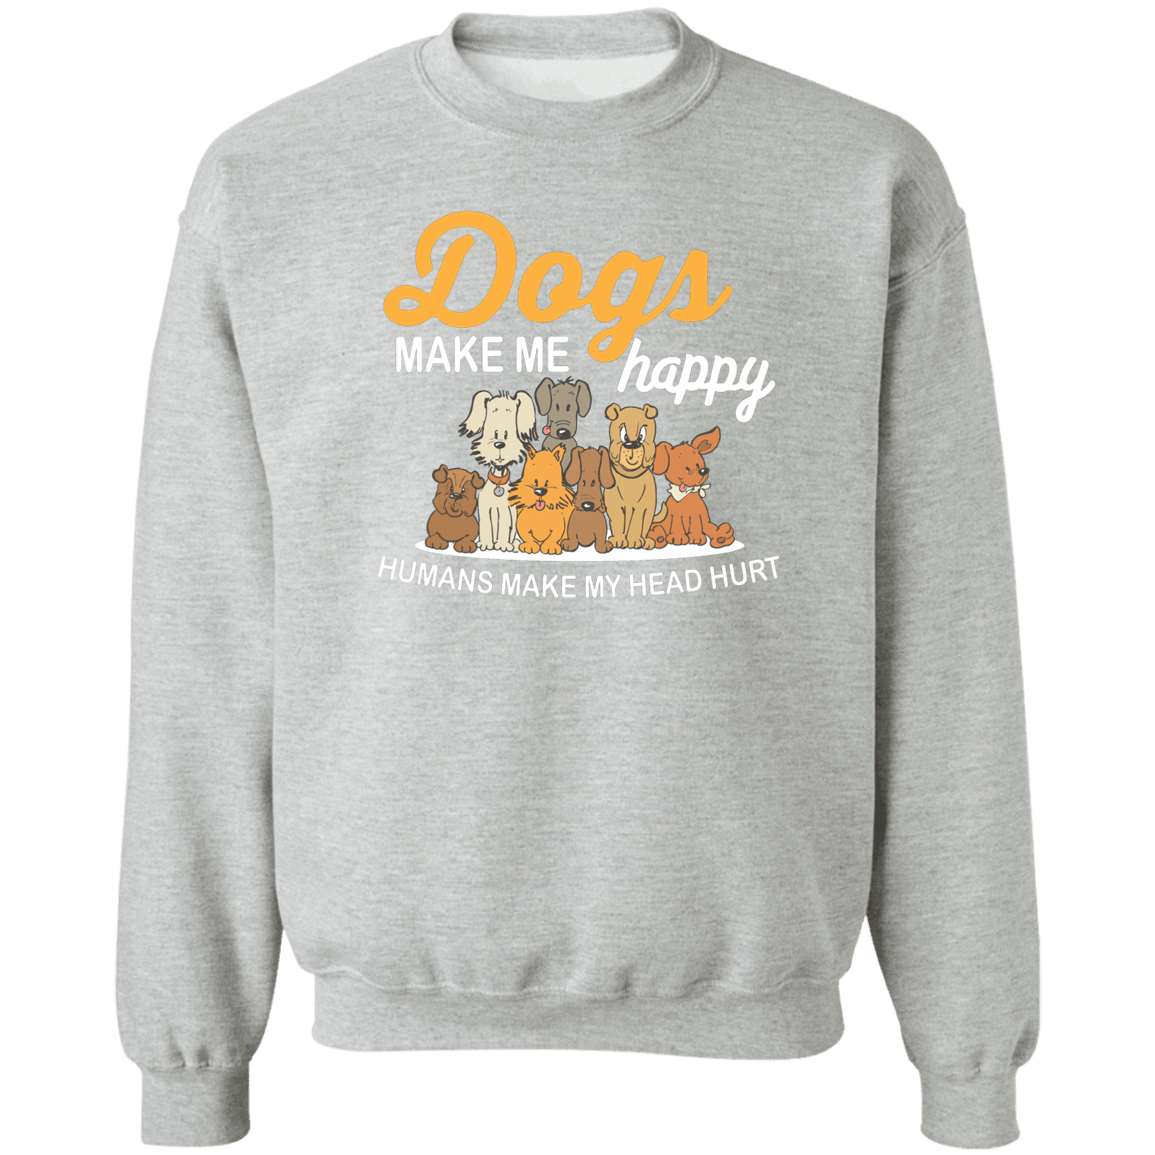 Dogs Make Me Happy, Humans Make My Head Hurt - Sweatshirt.